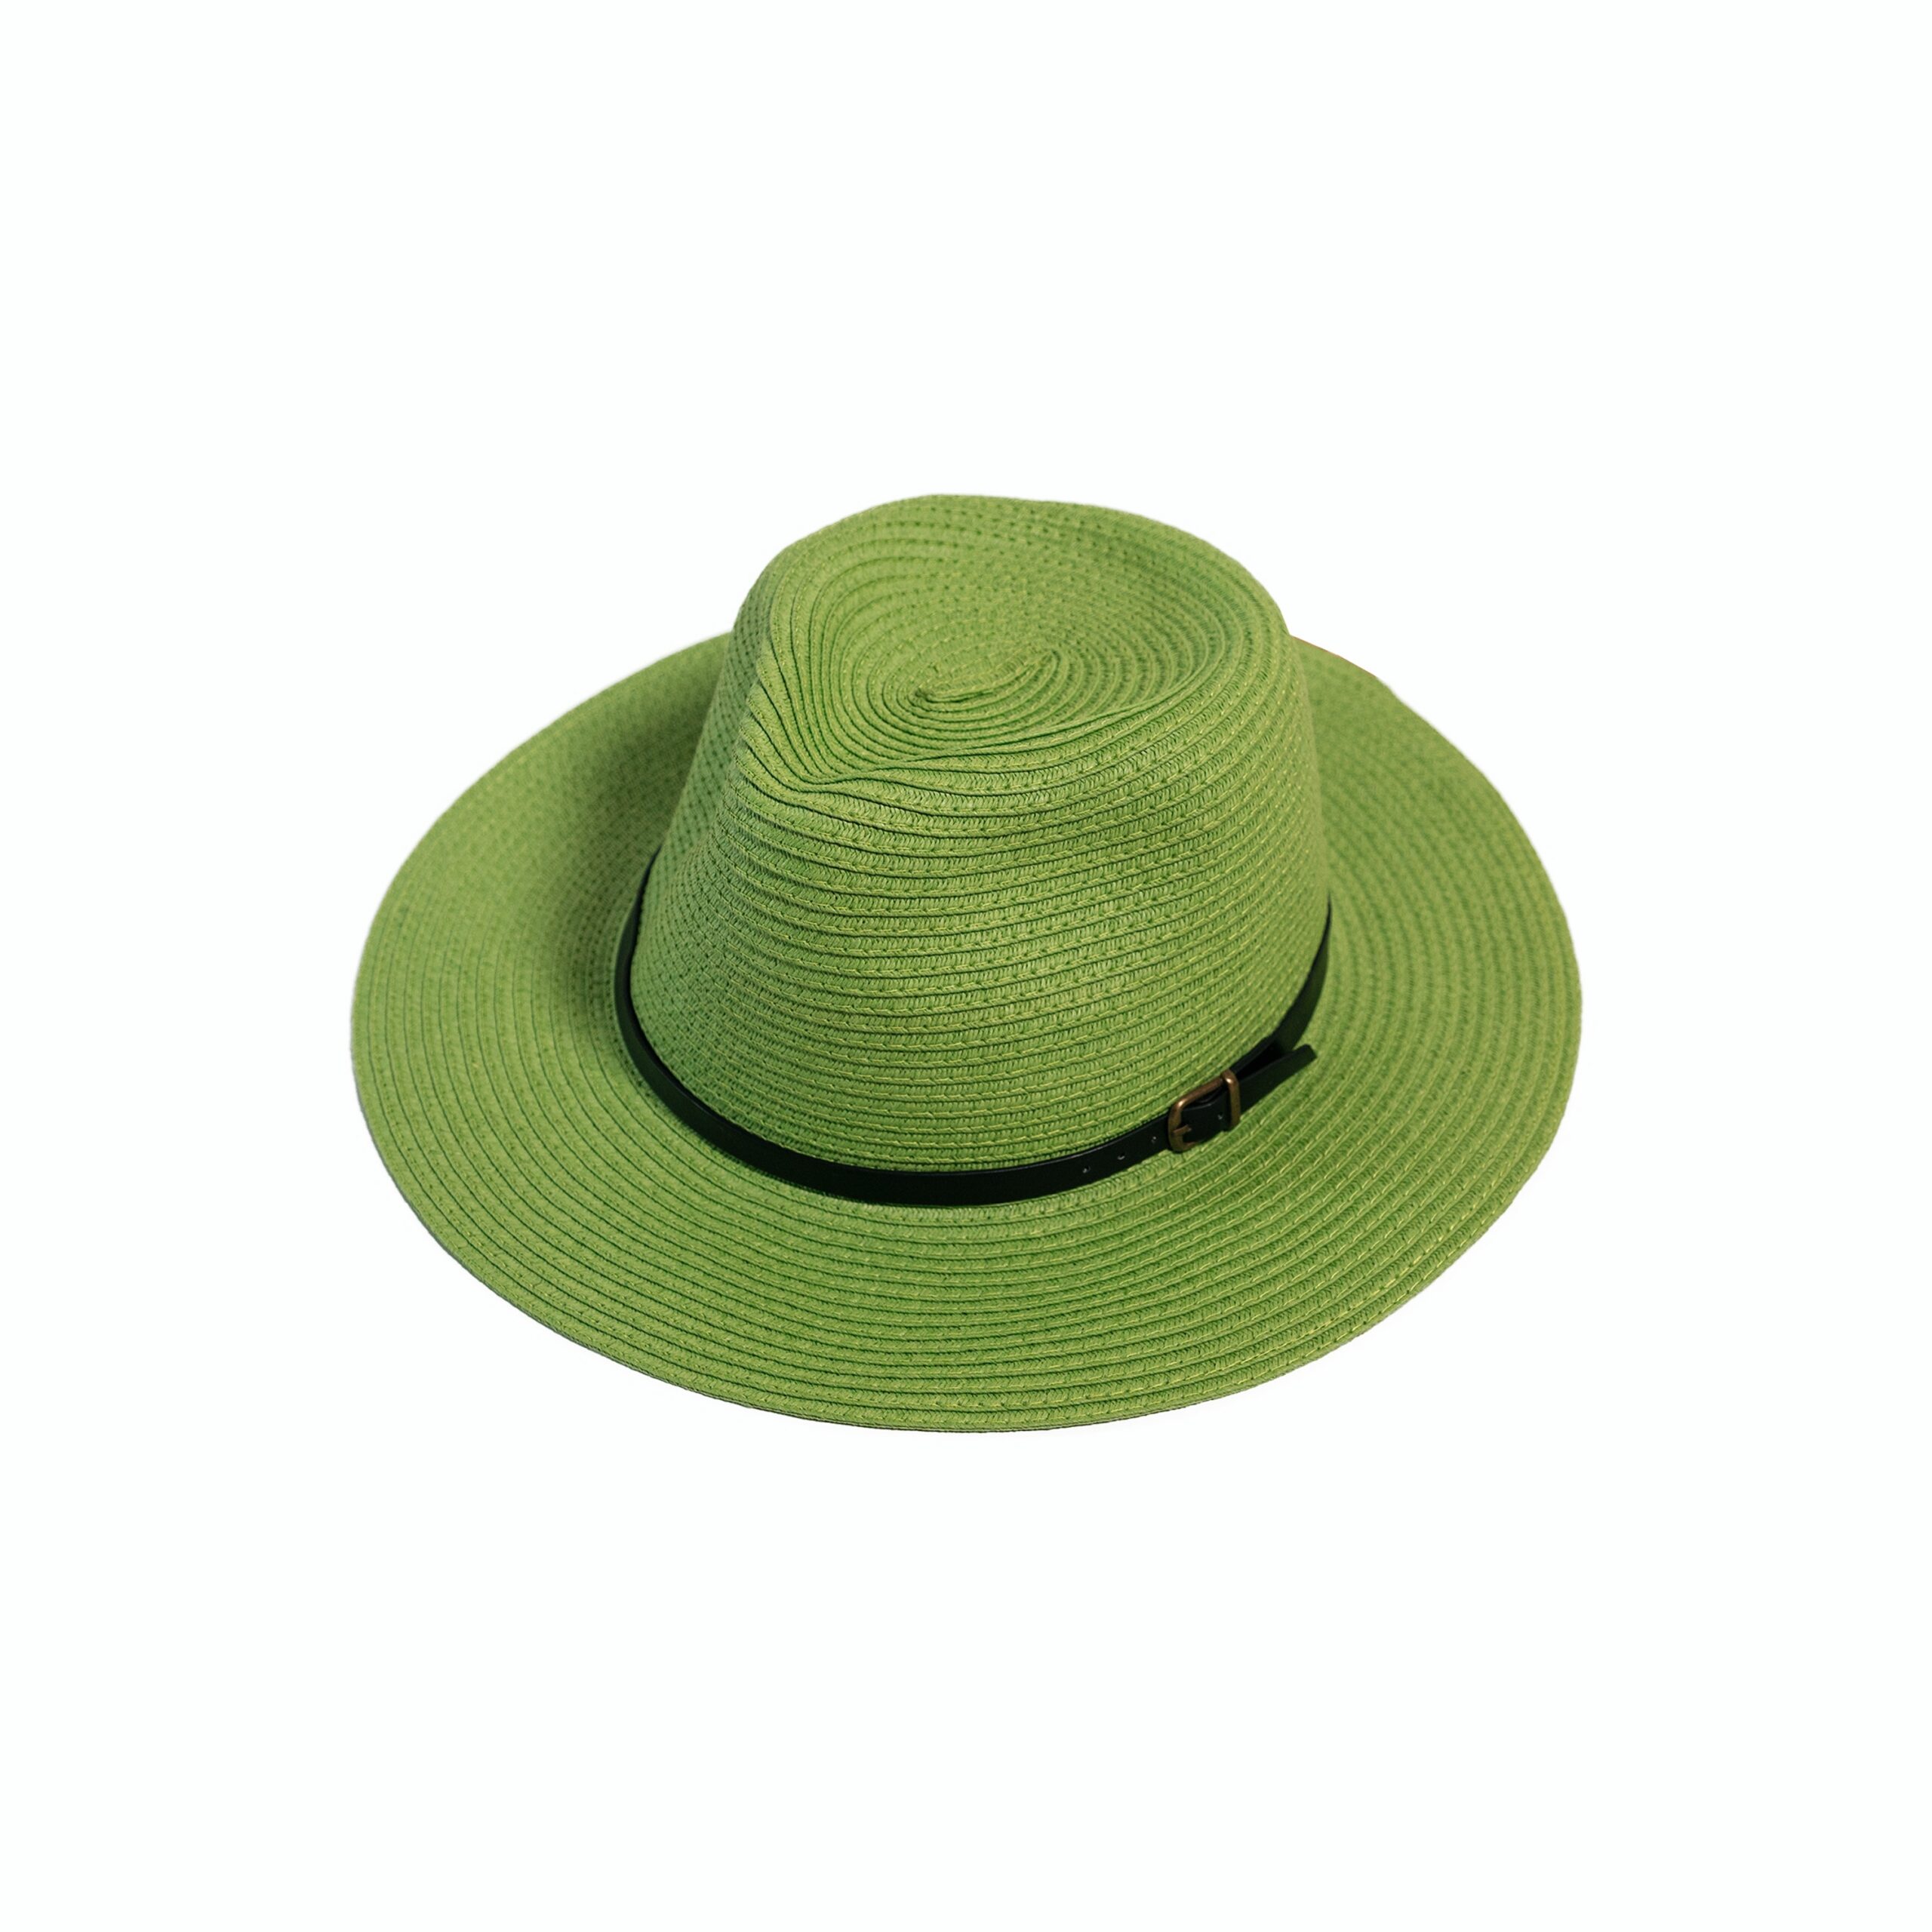 URBAN BEACH SANDTON GREEN HAT HT601